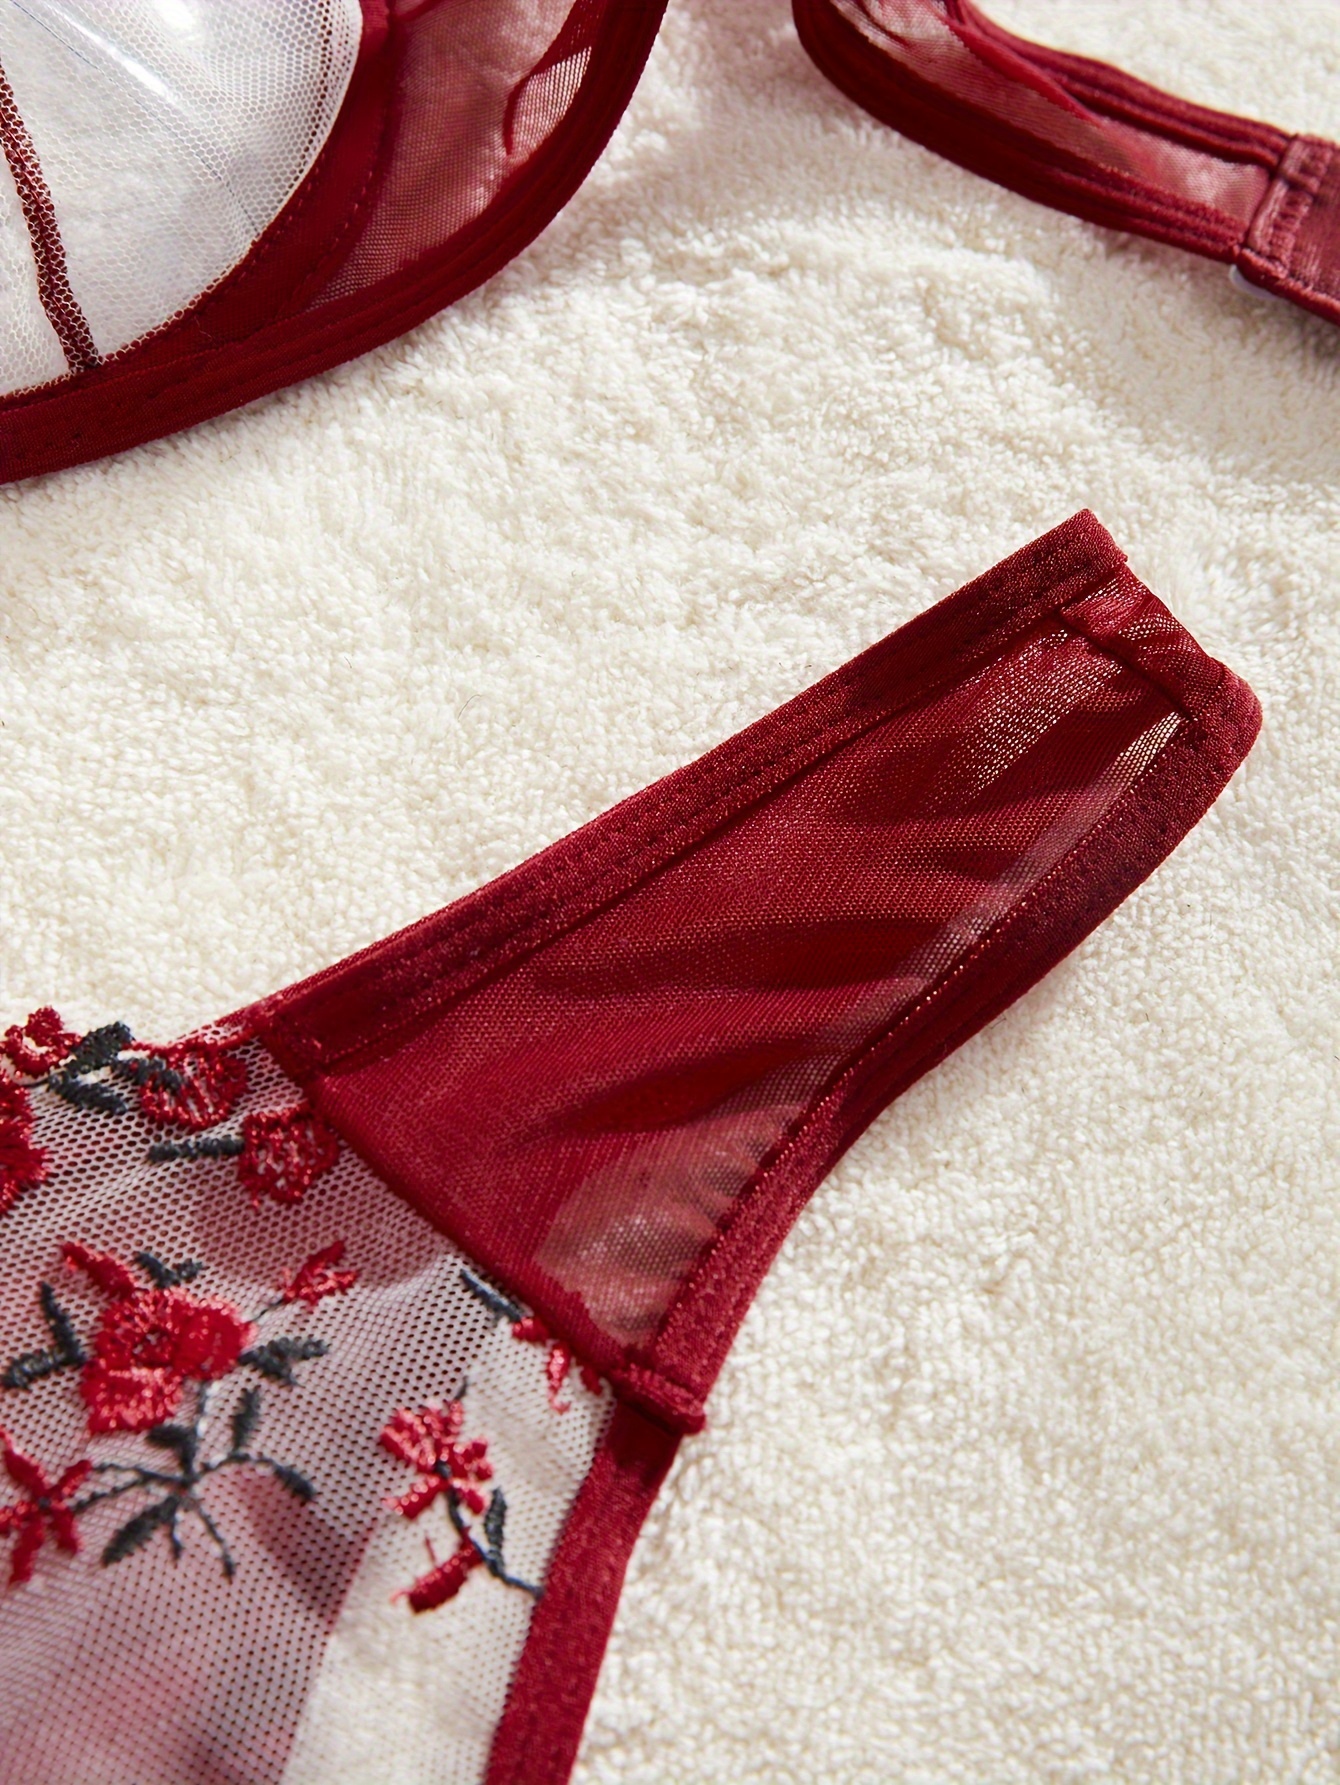 Flower Print Anti-light Matching Lingerie Set, Push Up Underwire Bra &  Bikini Panties, Women's Lingerie & Underwear